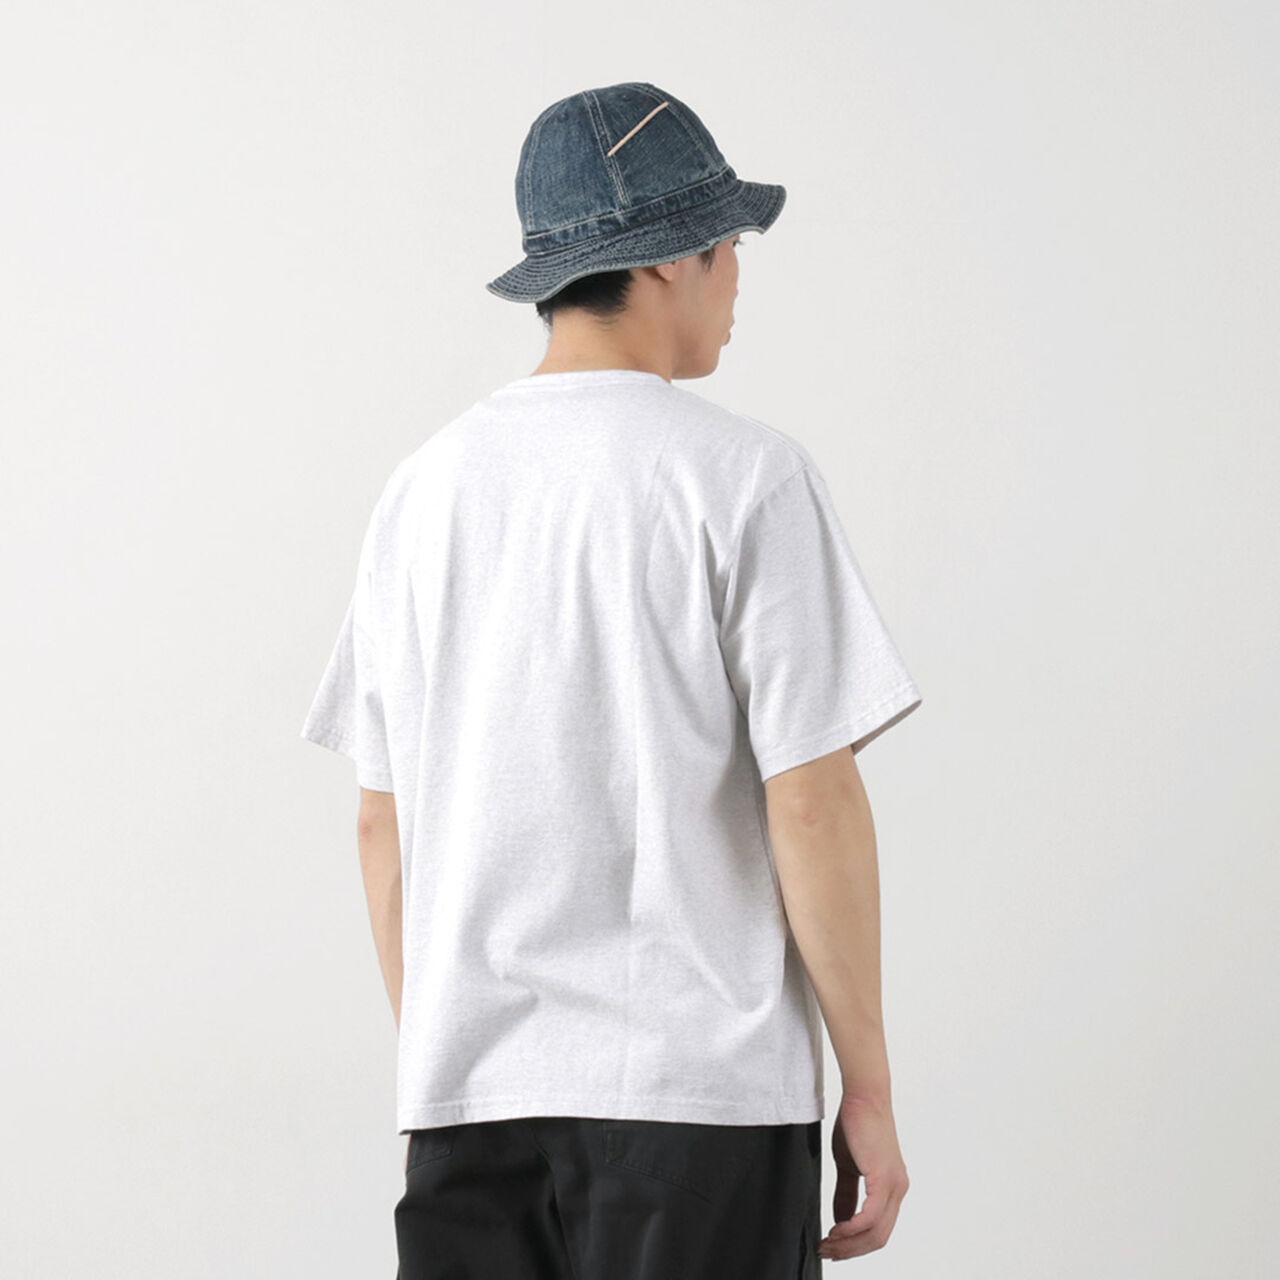 Toughneck Short Sleeve Solid T-Shirt,, large image number 12